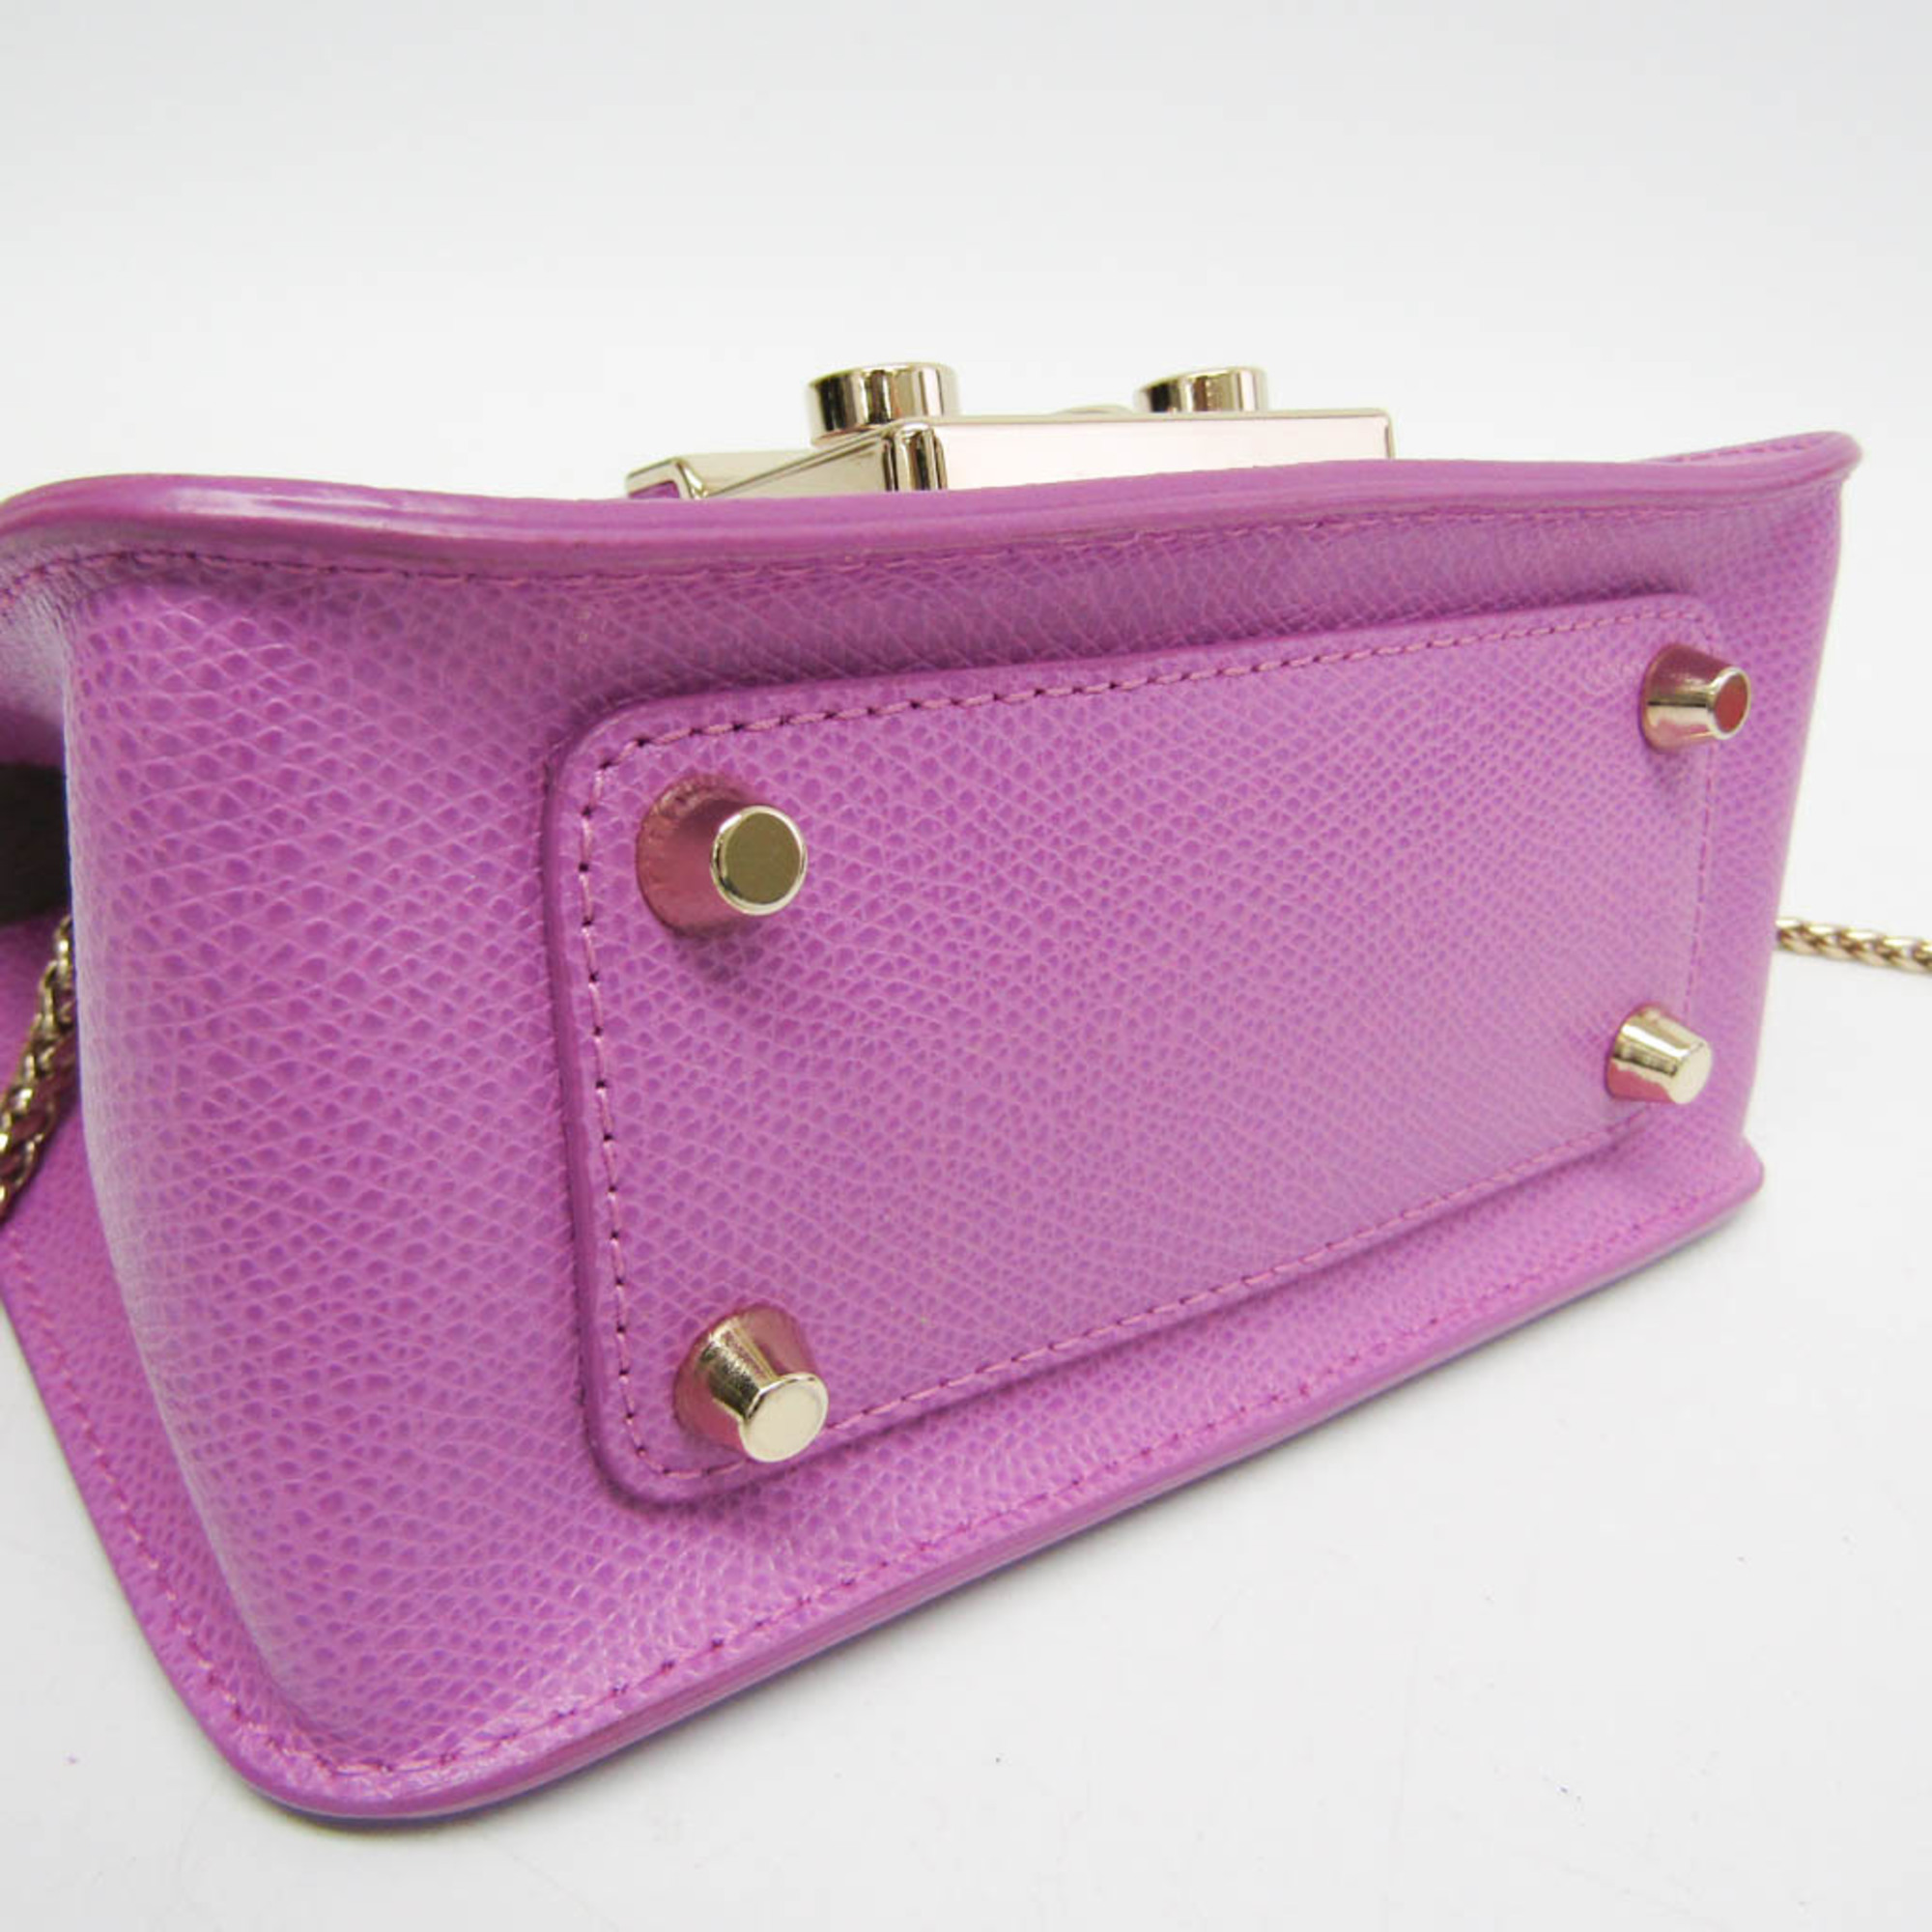 Furla Metropolis Chain G6400 Women's Leather Shoulder Bag Pink,Purple